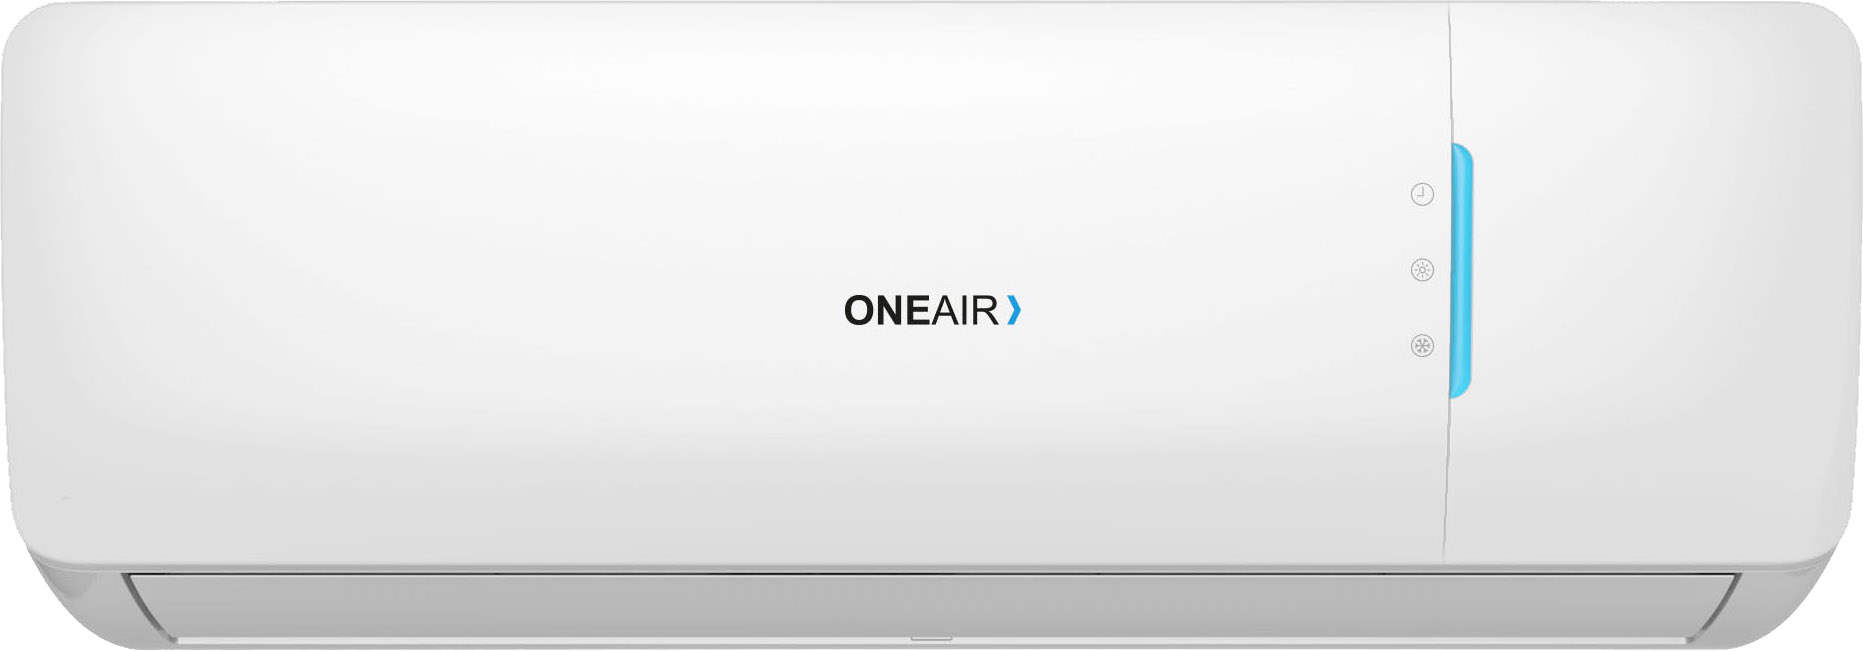 Кондиционер сплит-система OneAir OAC-18H/N1 цена 0.00 грн - фотография 2